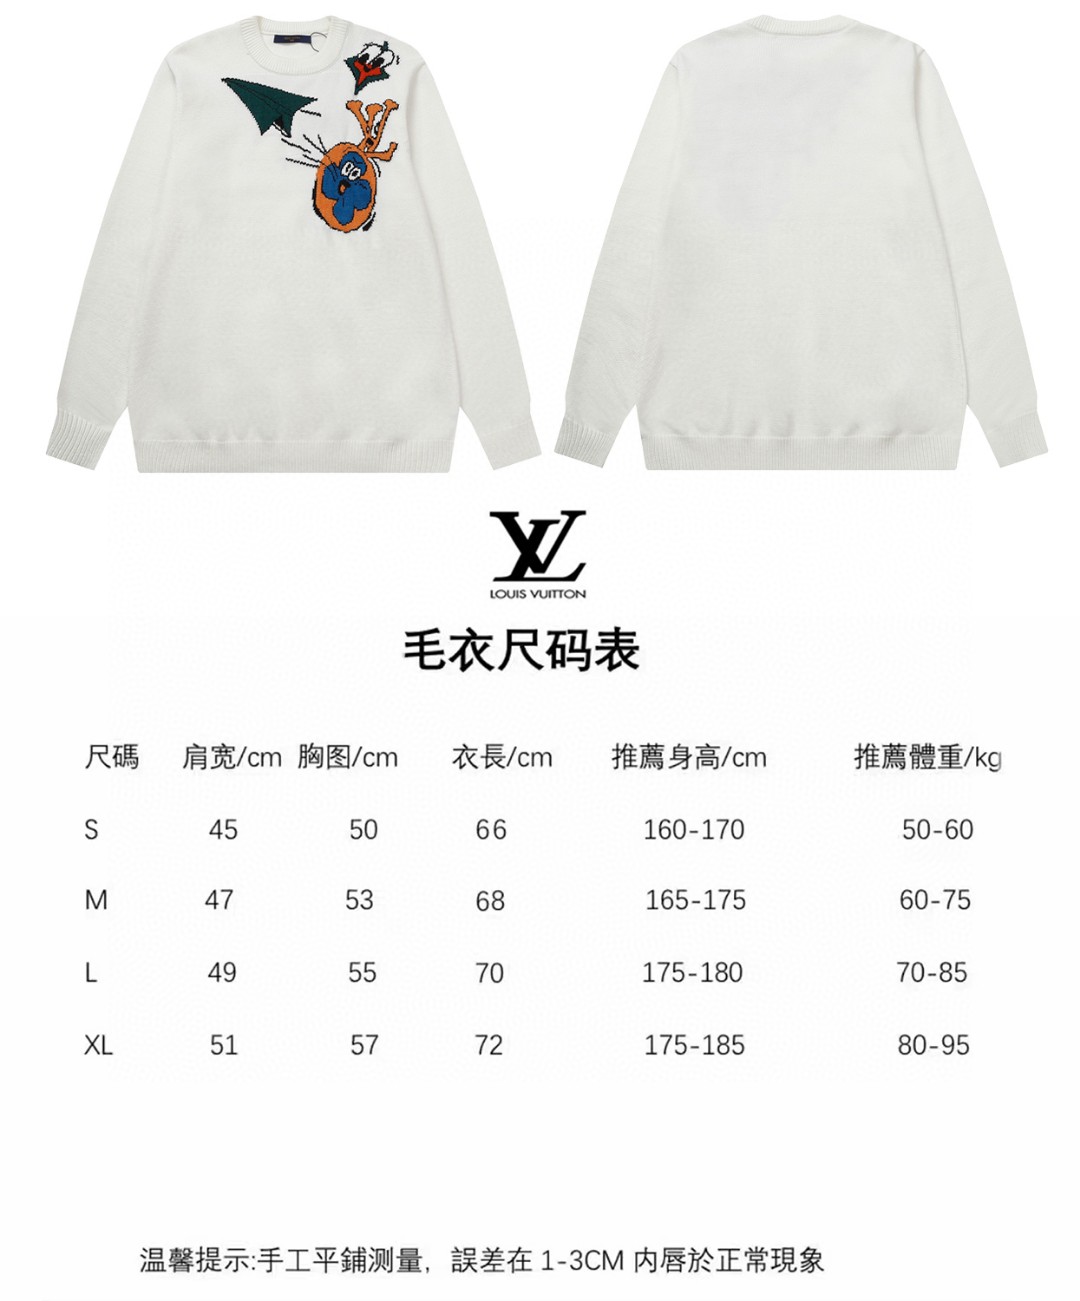 Louis Vuitton Clothing Sweatshirts Fashion